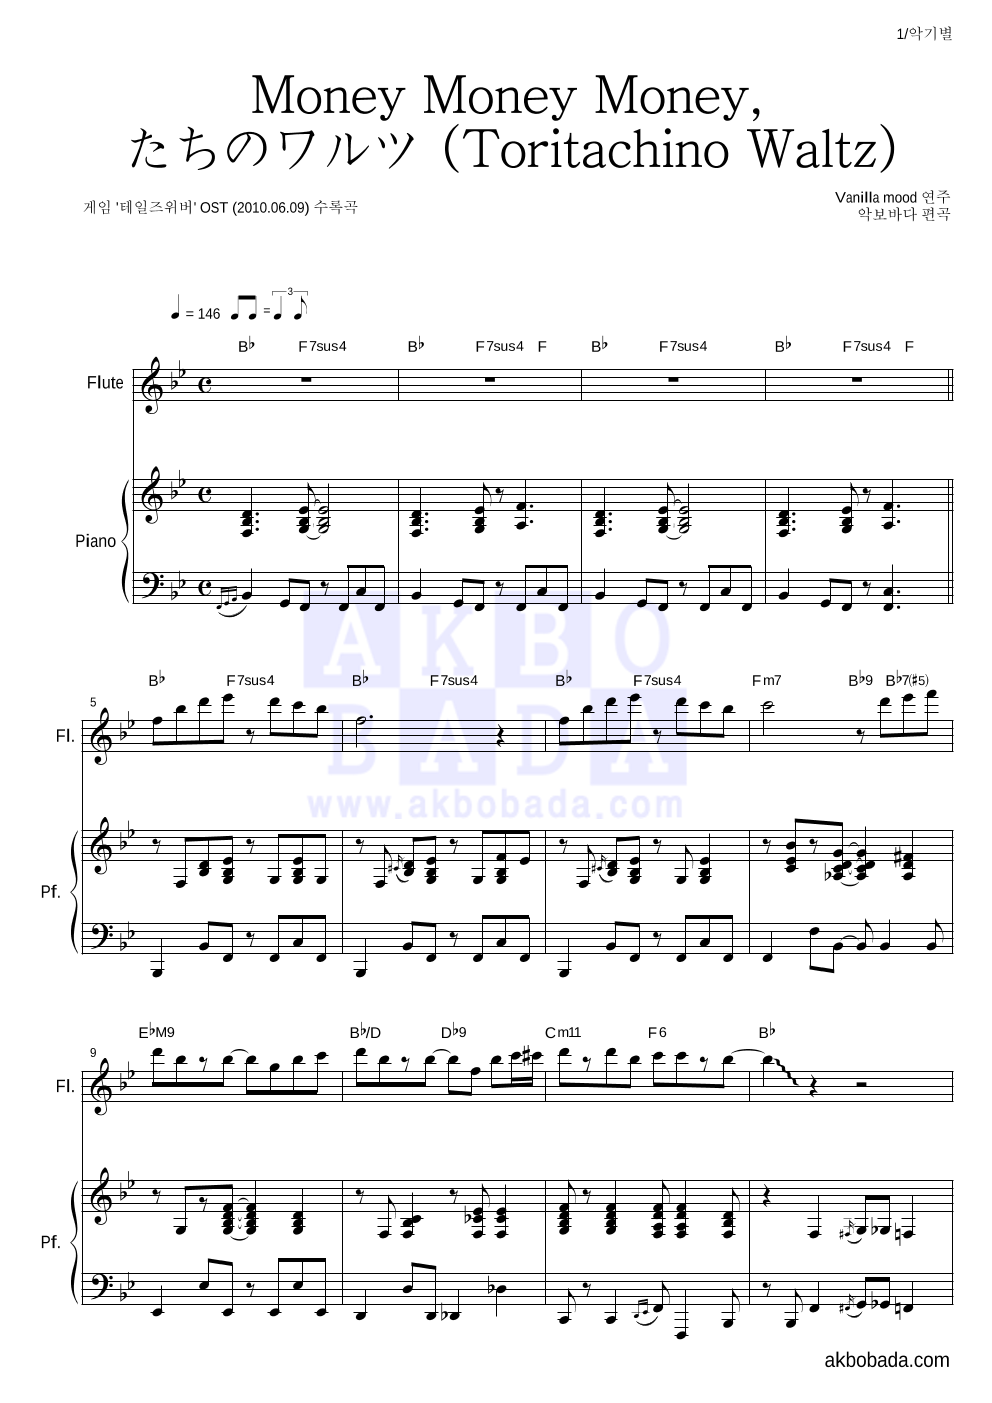 Vanilla Mood - Money Money Money-鳥たちのワルツ (Toritachino Waltz) 플룻&피아노 악보 